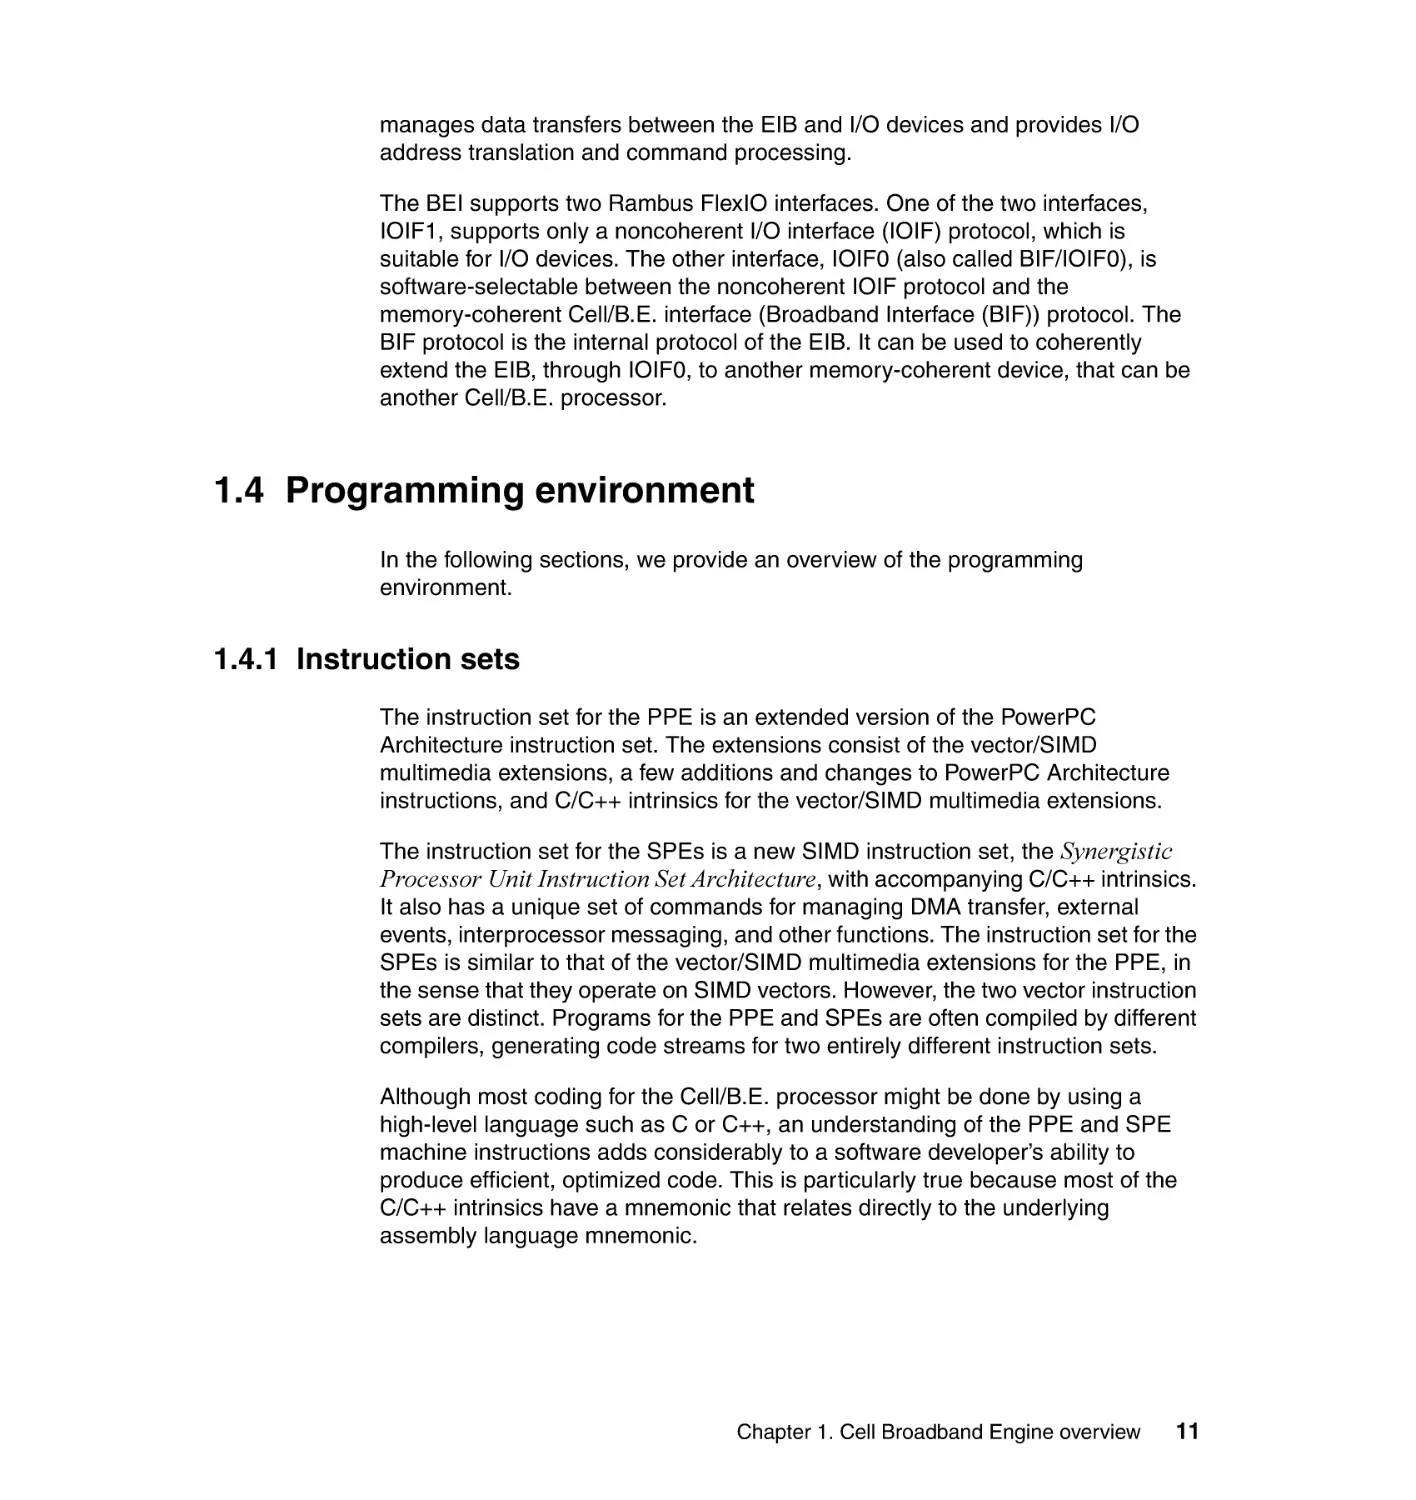 1.4 Programming environment
1.4.1 Instruction sets